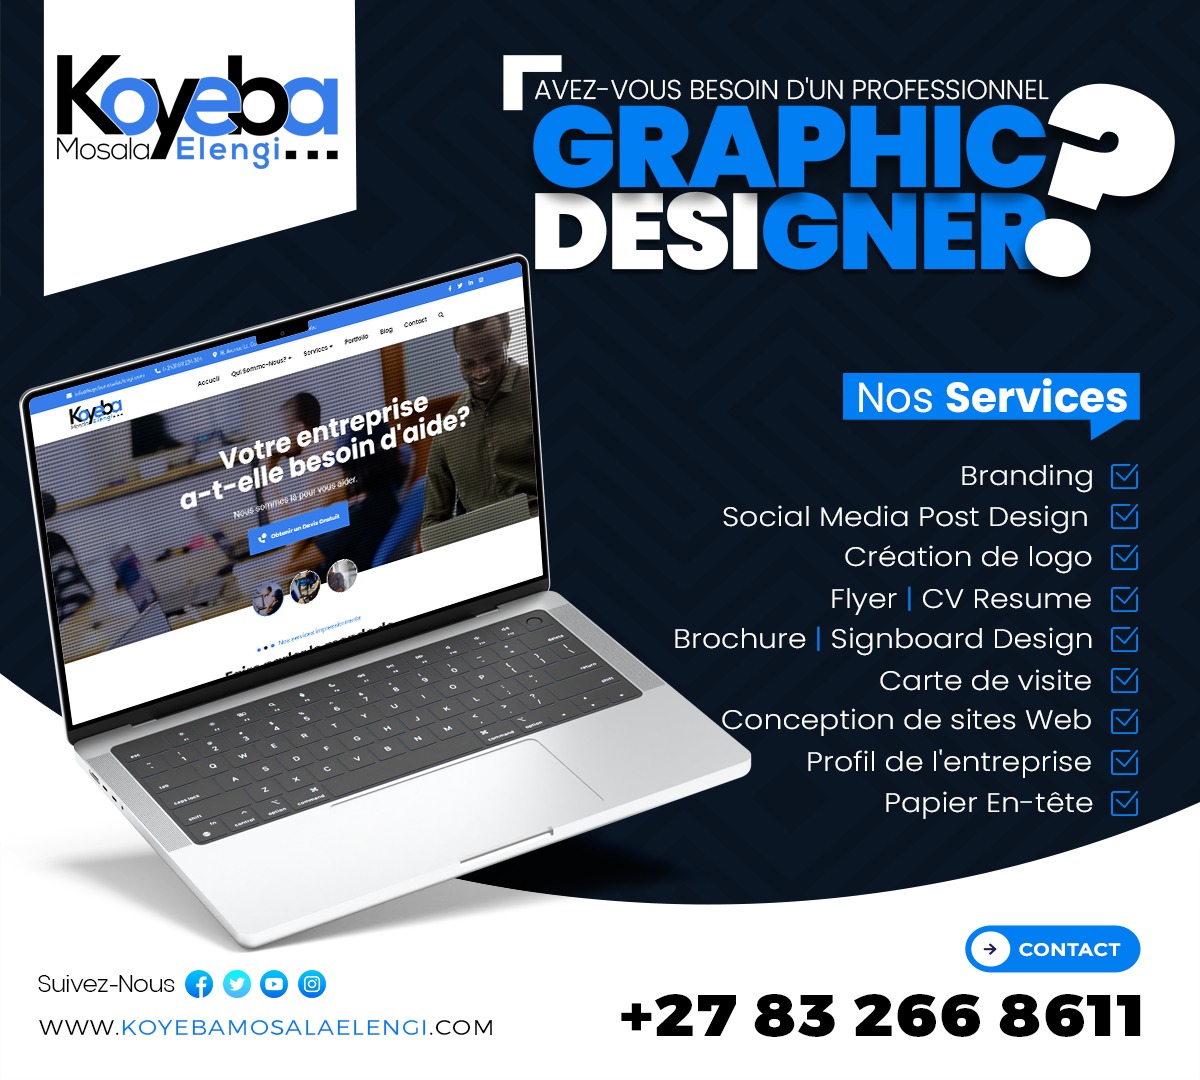 Koyeba Mosala Elengi👌
Chez nous c'est la qualité👌
#graphicart #marketing #graphicdesigner #digital #digitalmarketingtips #graphic